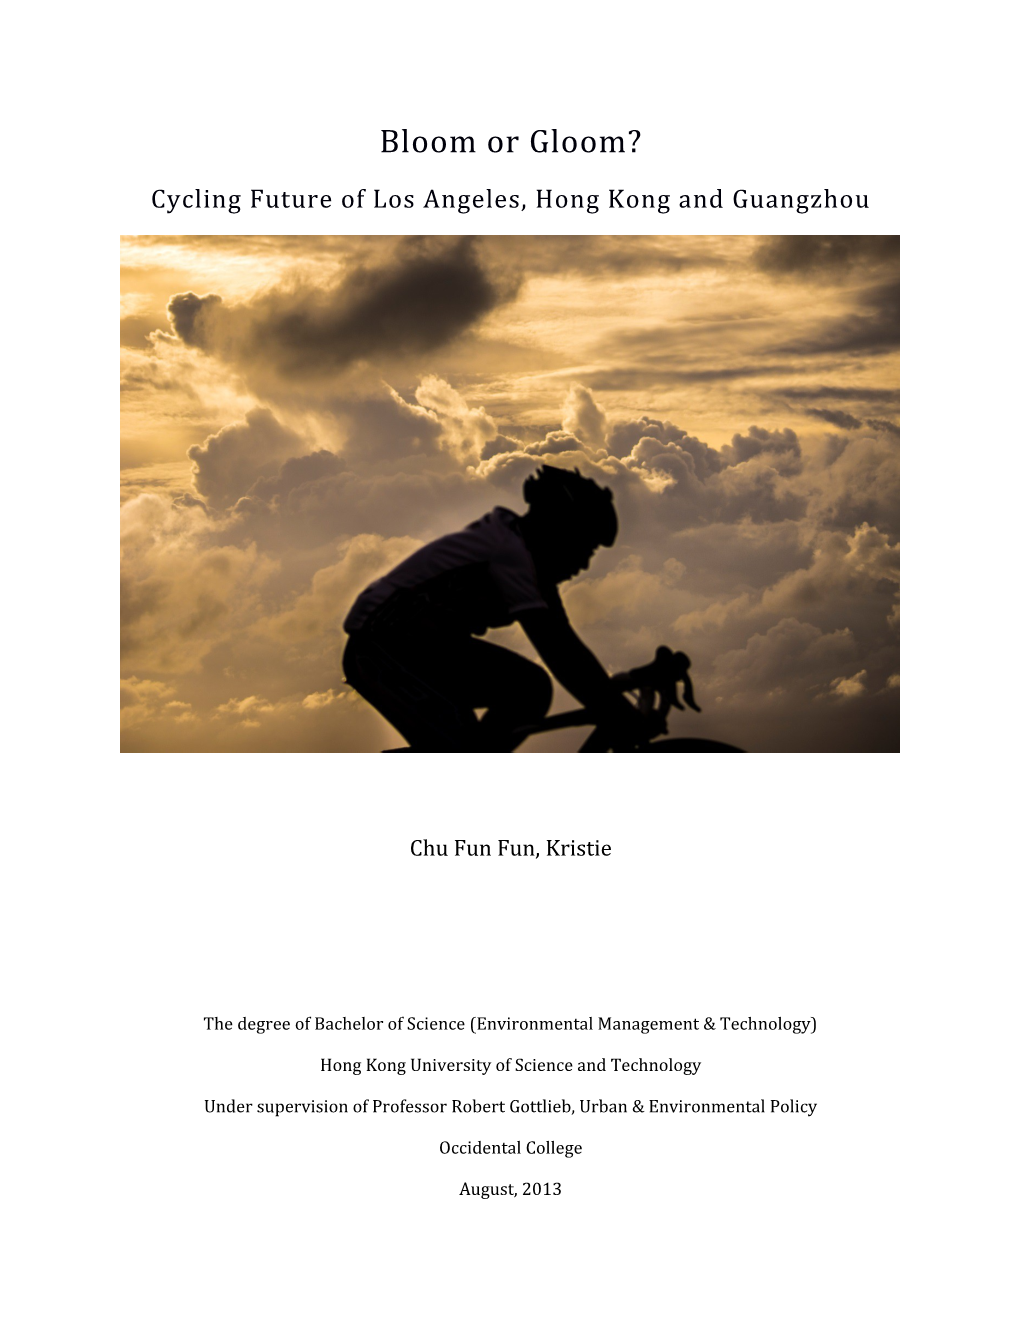 Cycling Future of Los Angeles, Hong Kong and Guangzhou